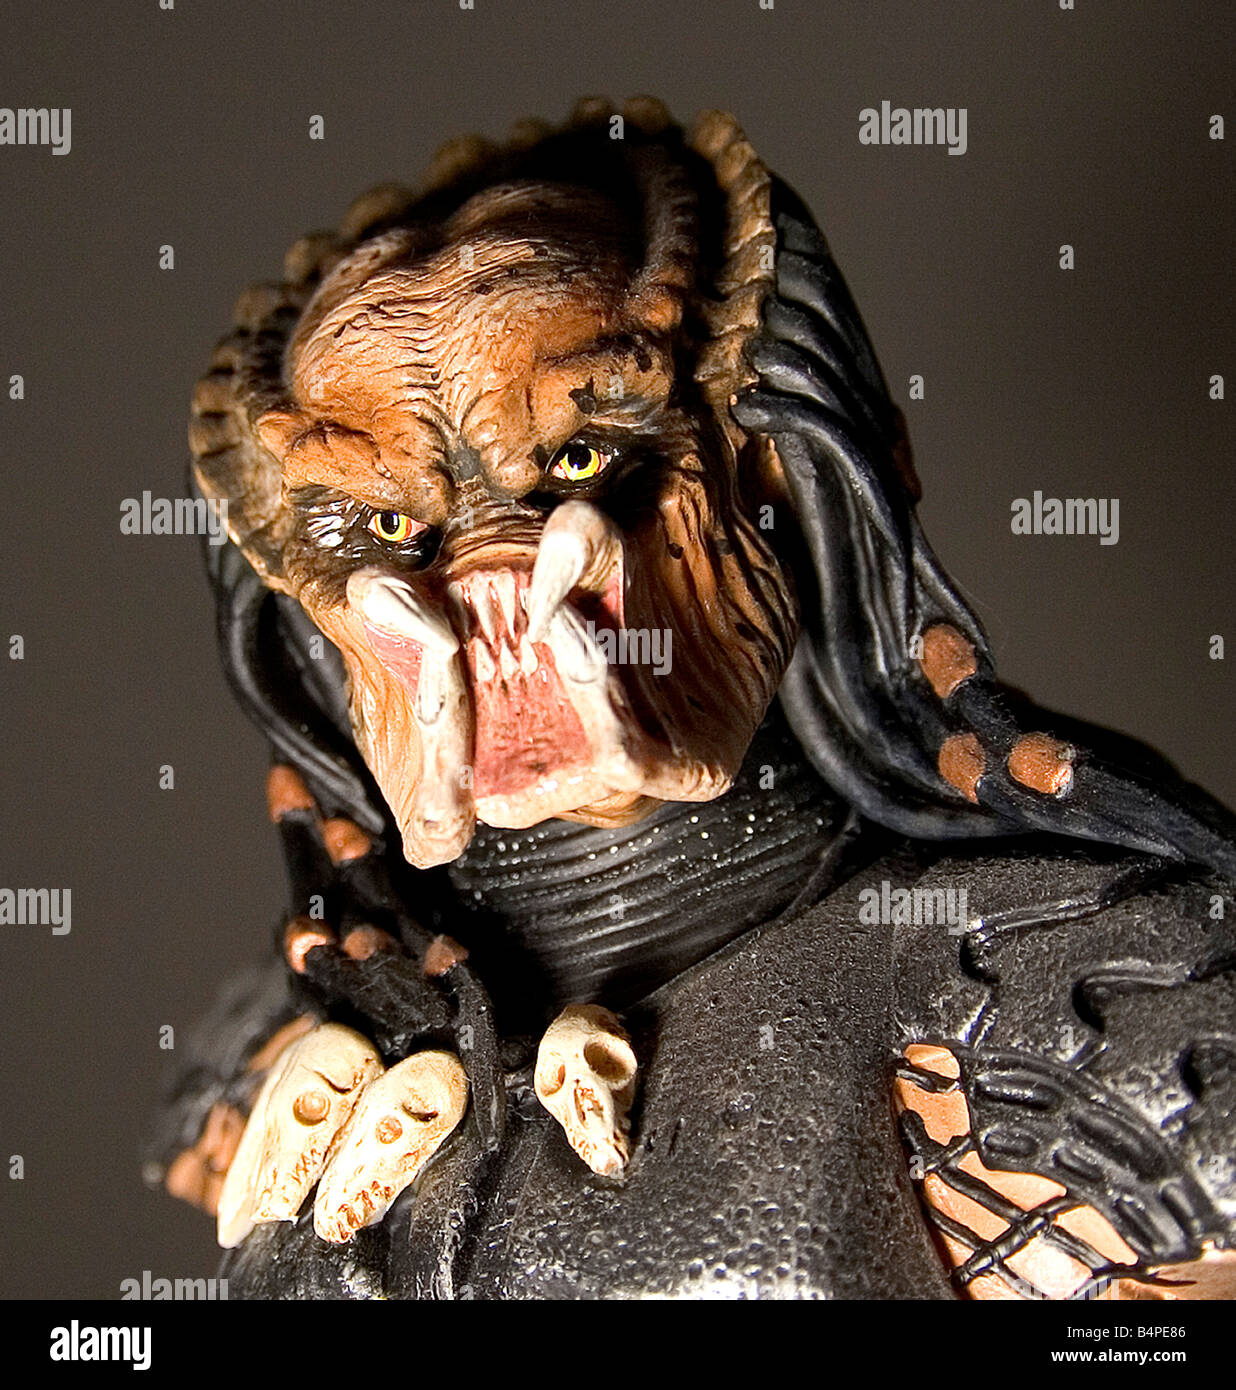 menacing alien figure form the movie Predator Stock Photo